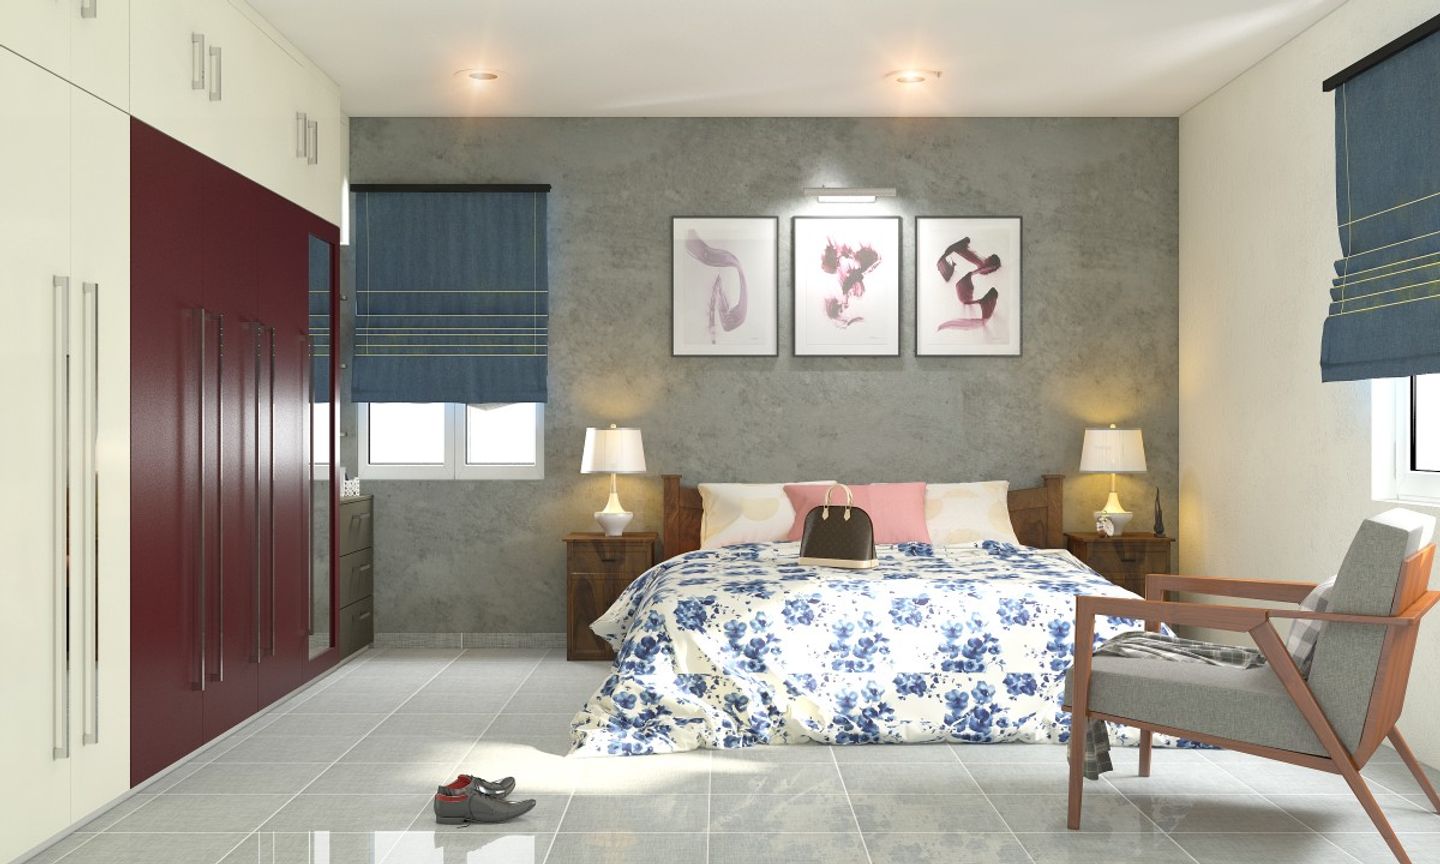 Modern Master Bedroom Design With Wallpaint